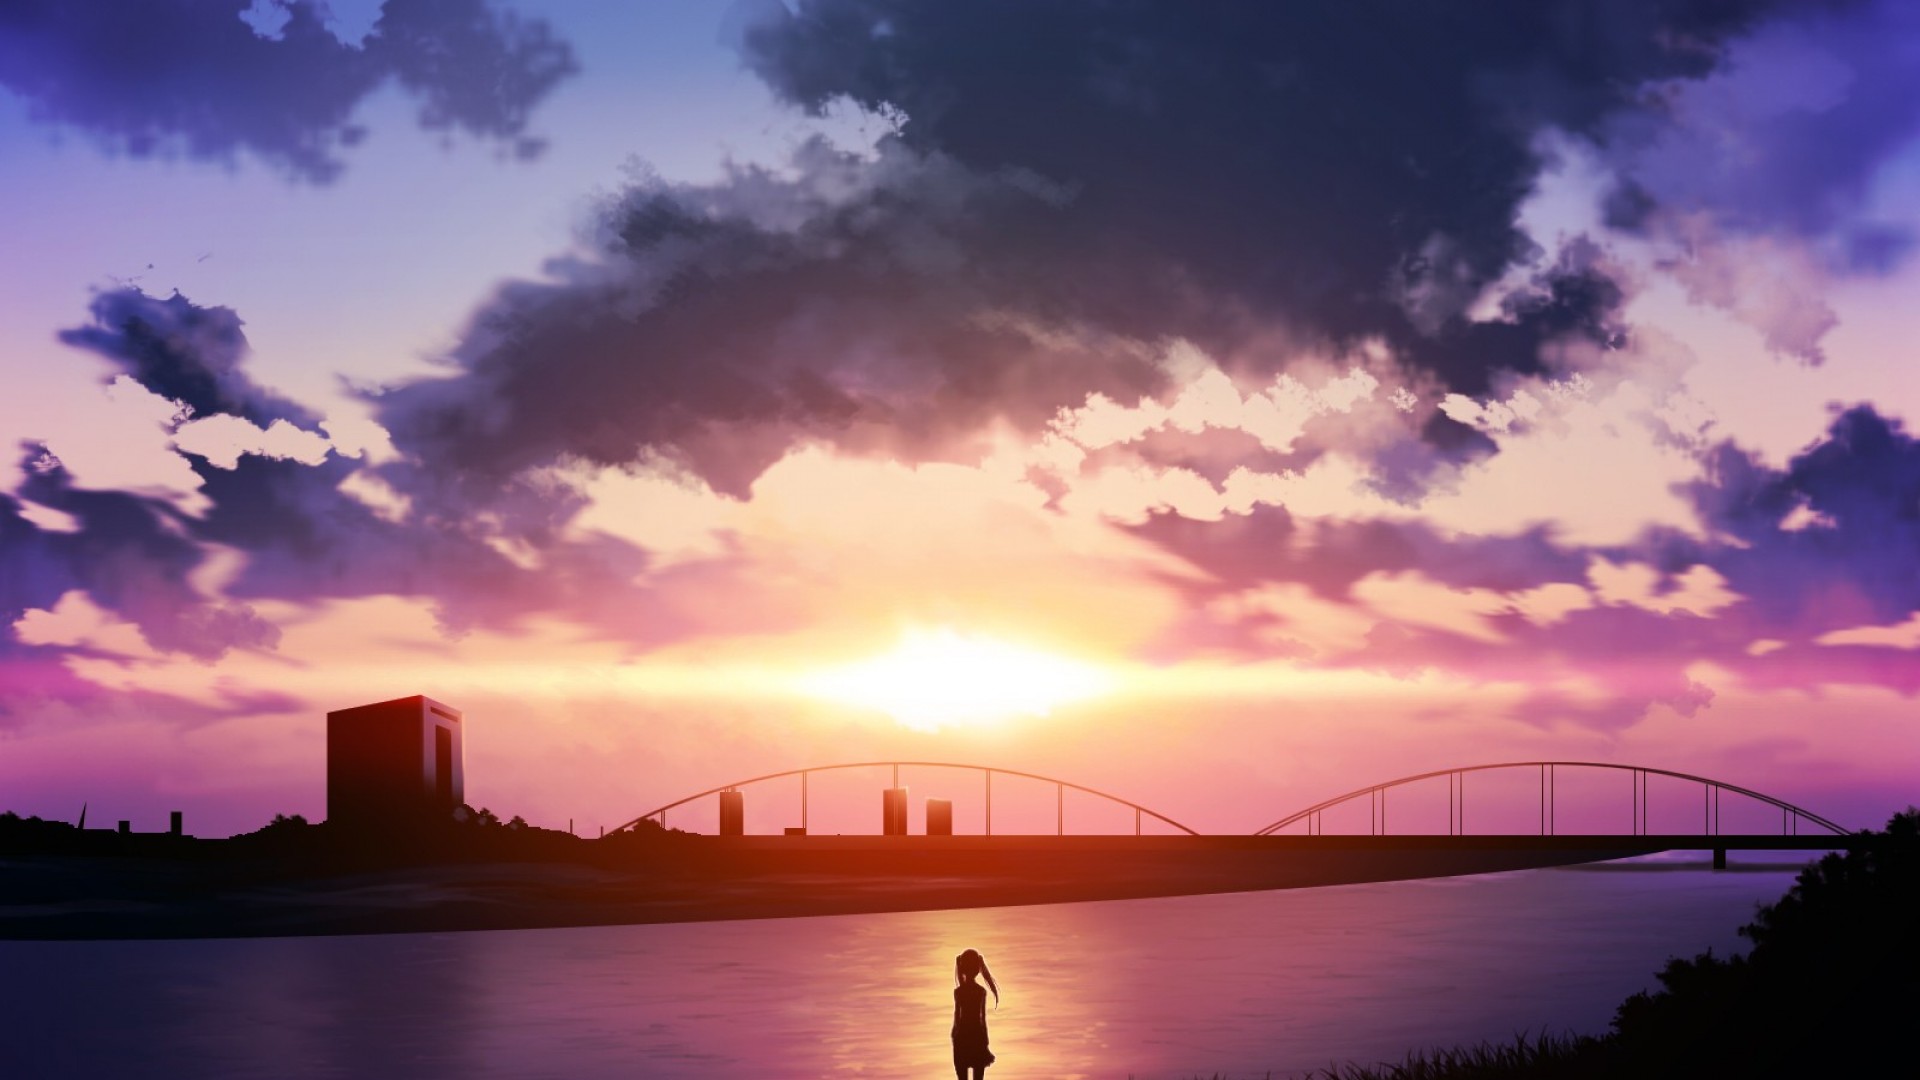 Anime Scenery Wallpaper HD